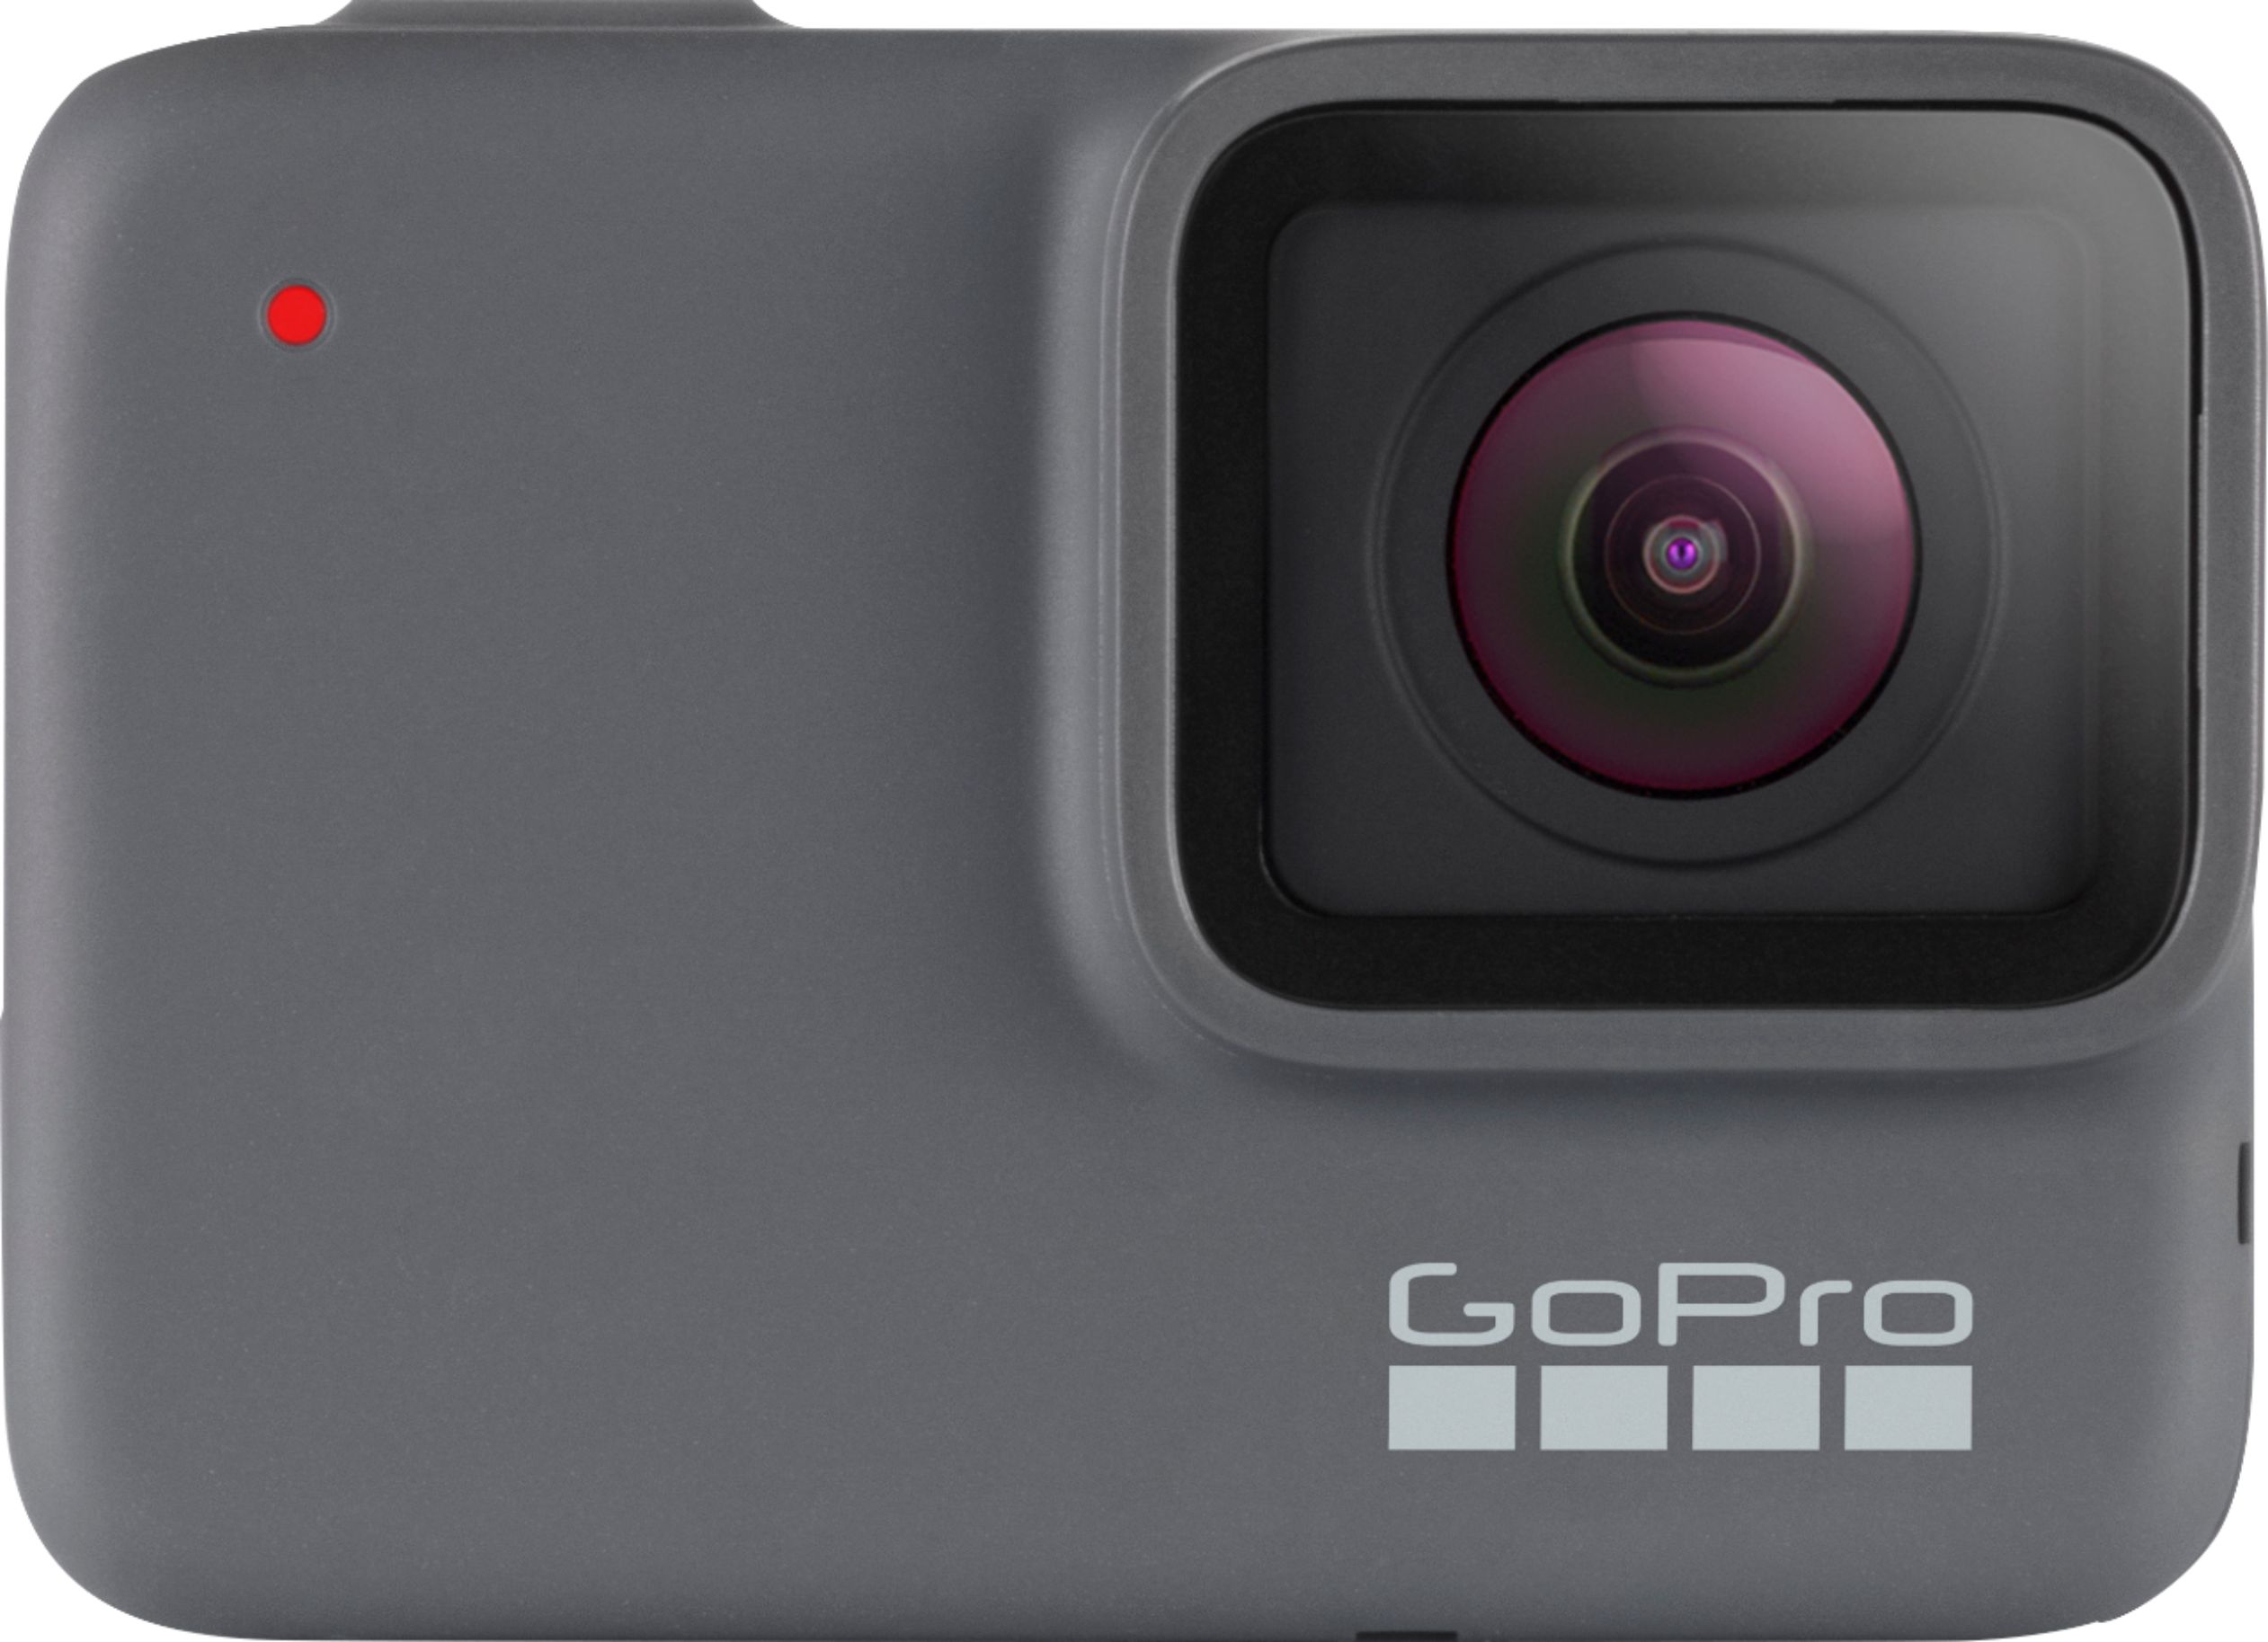 Gopro Hero7 Silver 4k Waterproof Action Camera Silver Chdhc 601 Best Buy